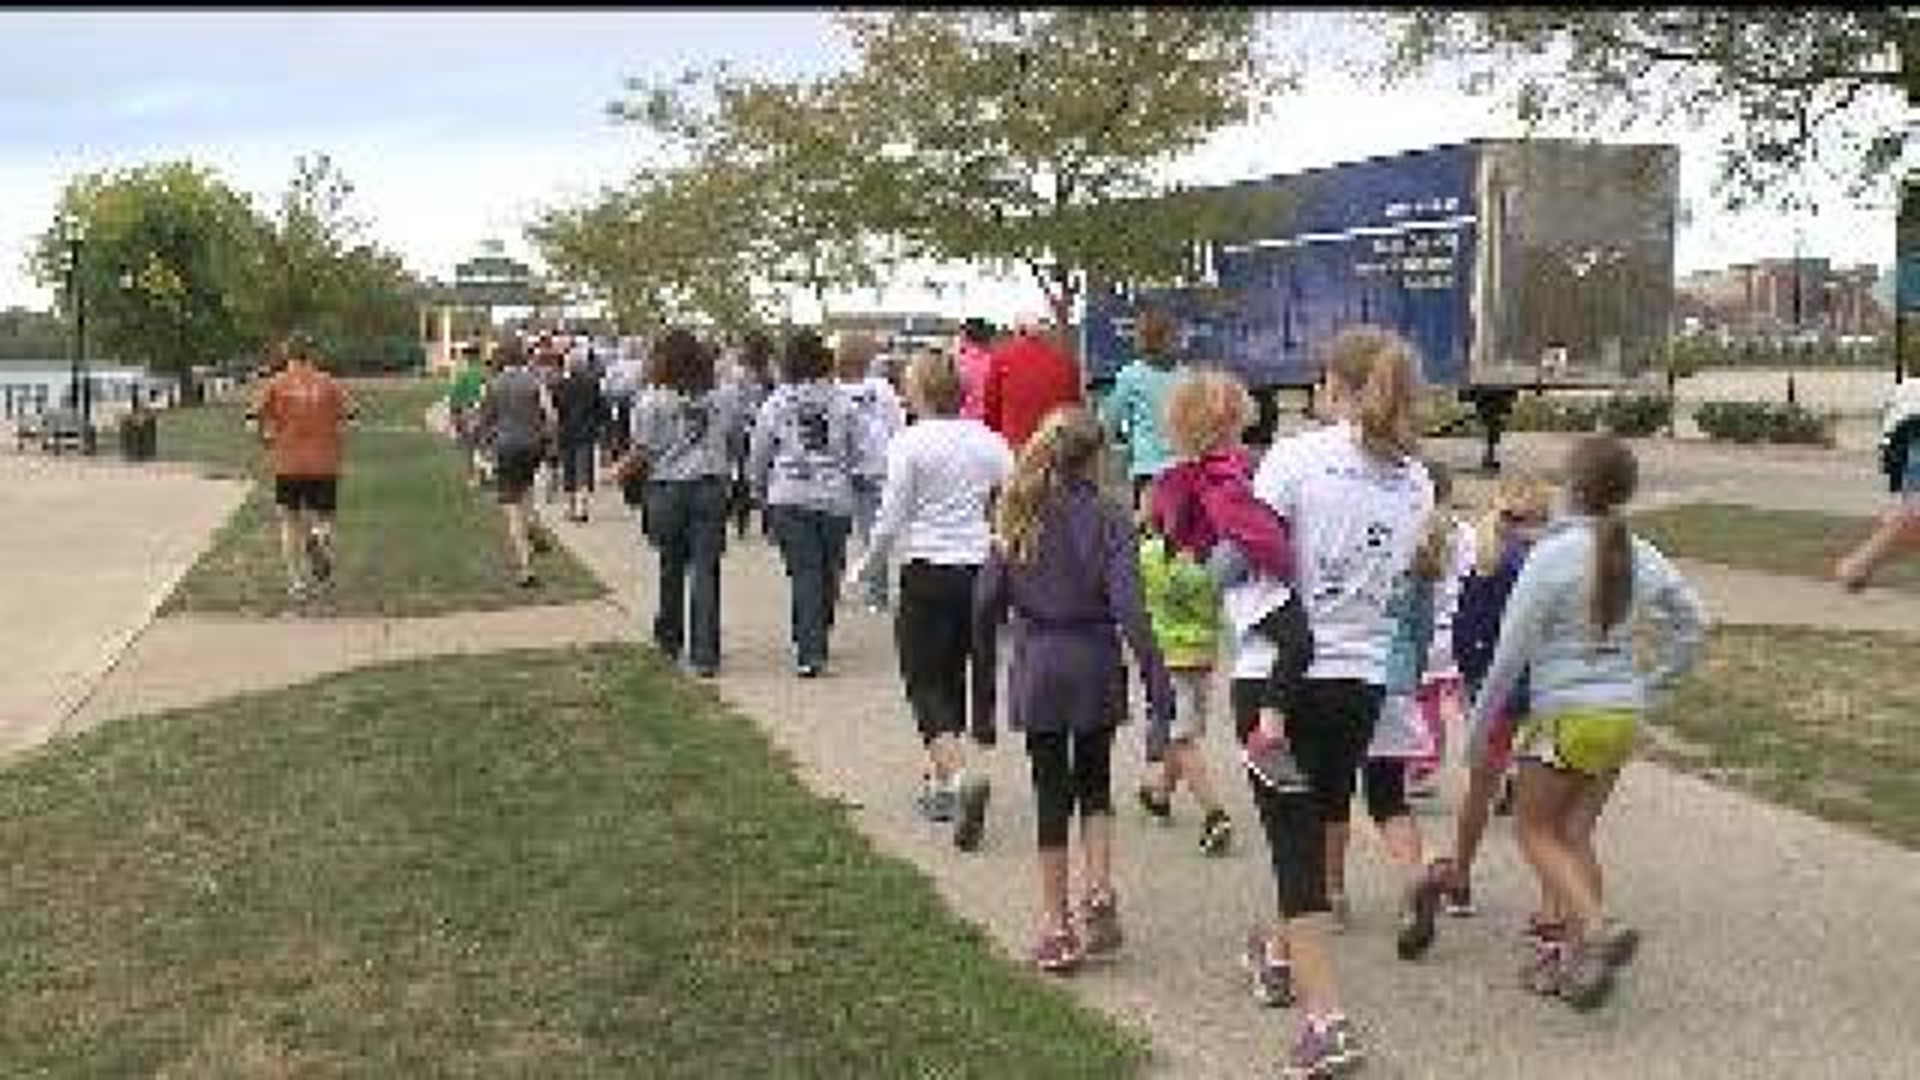 Iowa residents walk for wishes